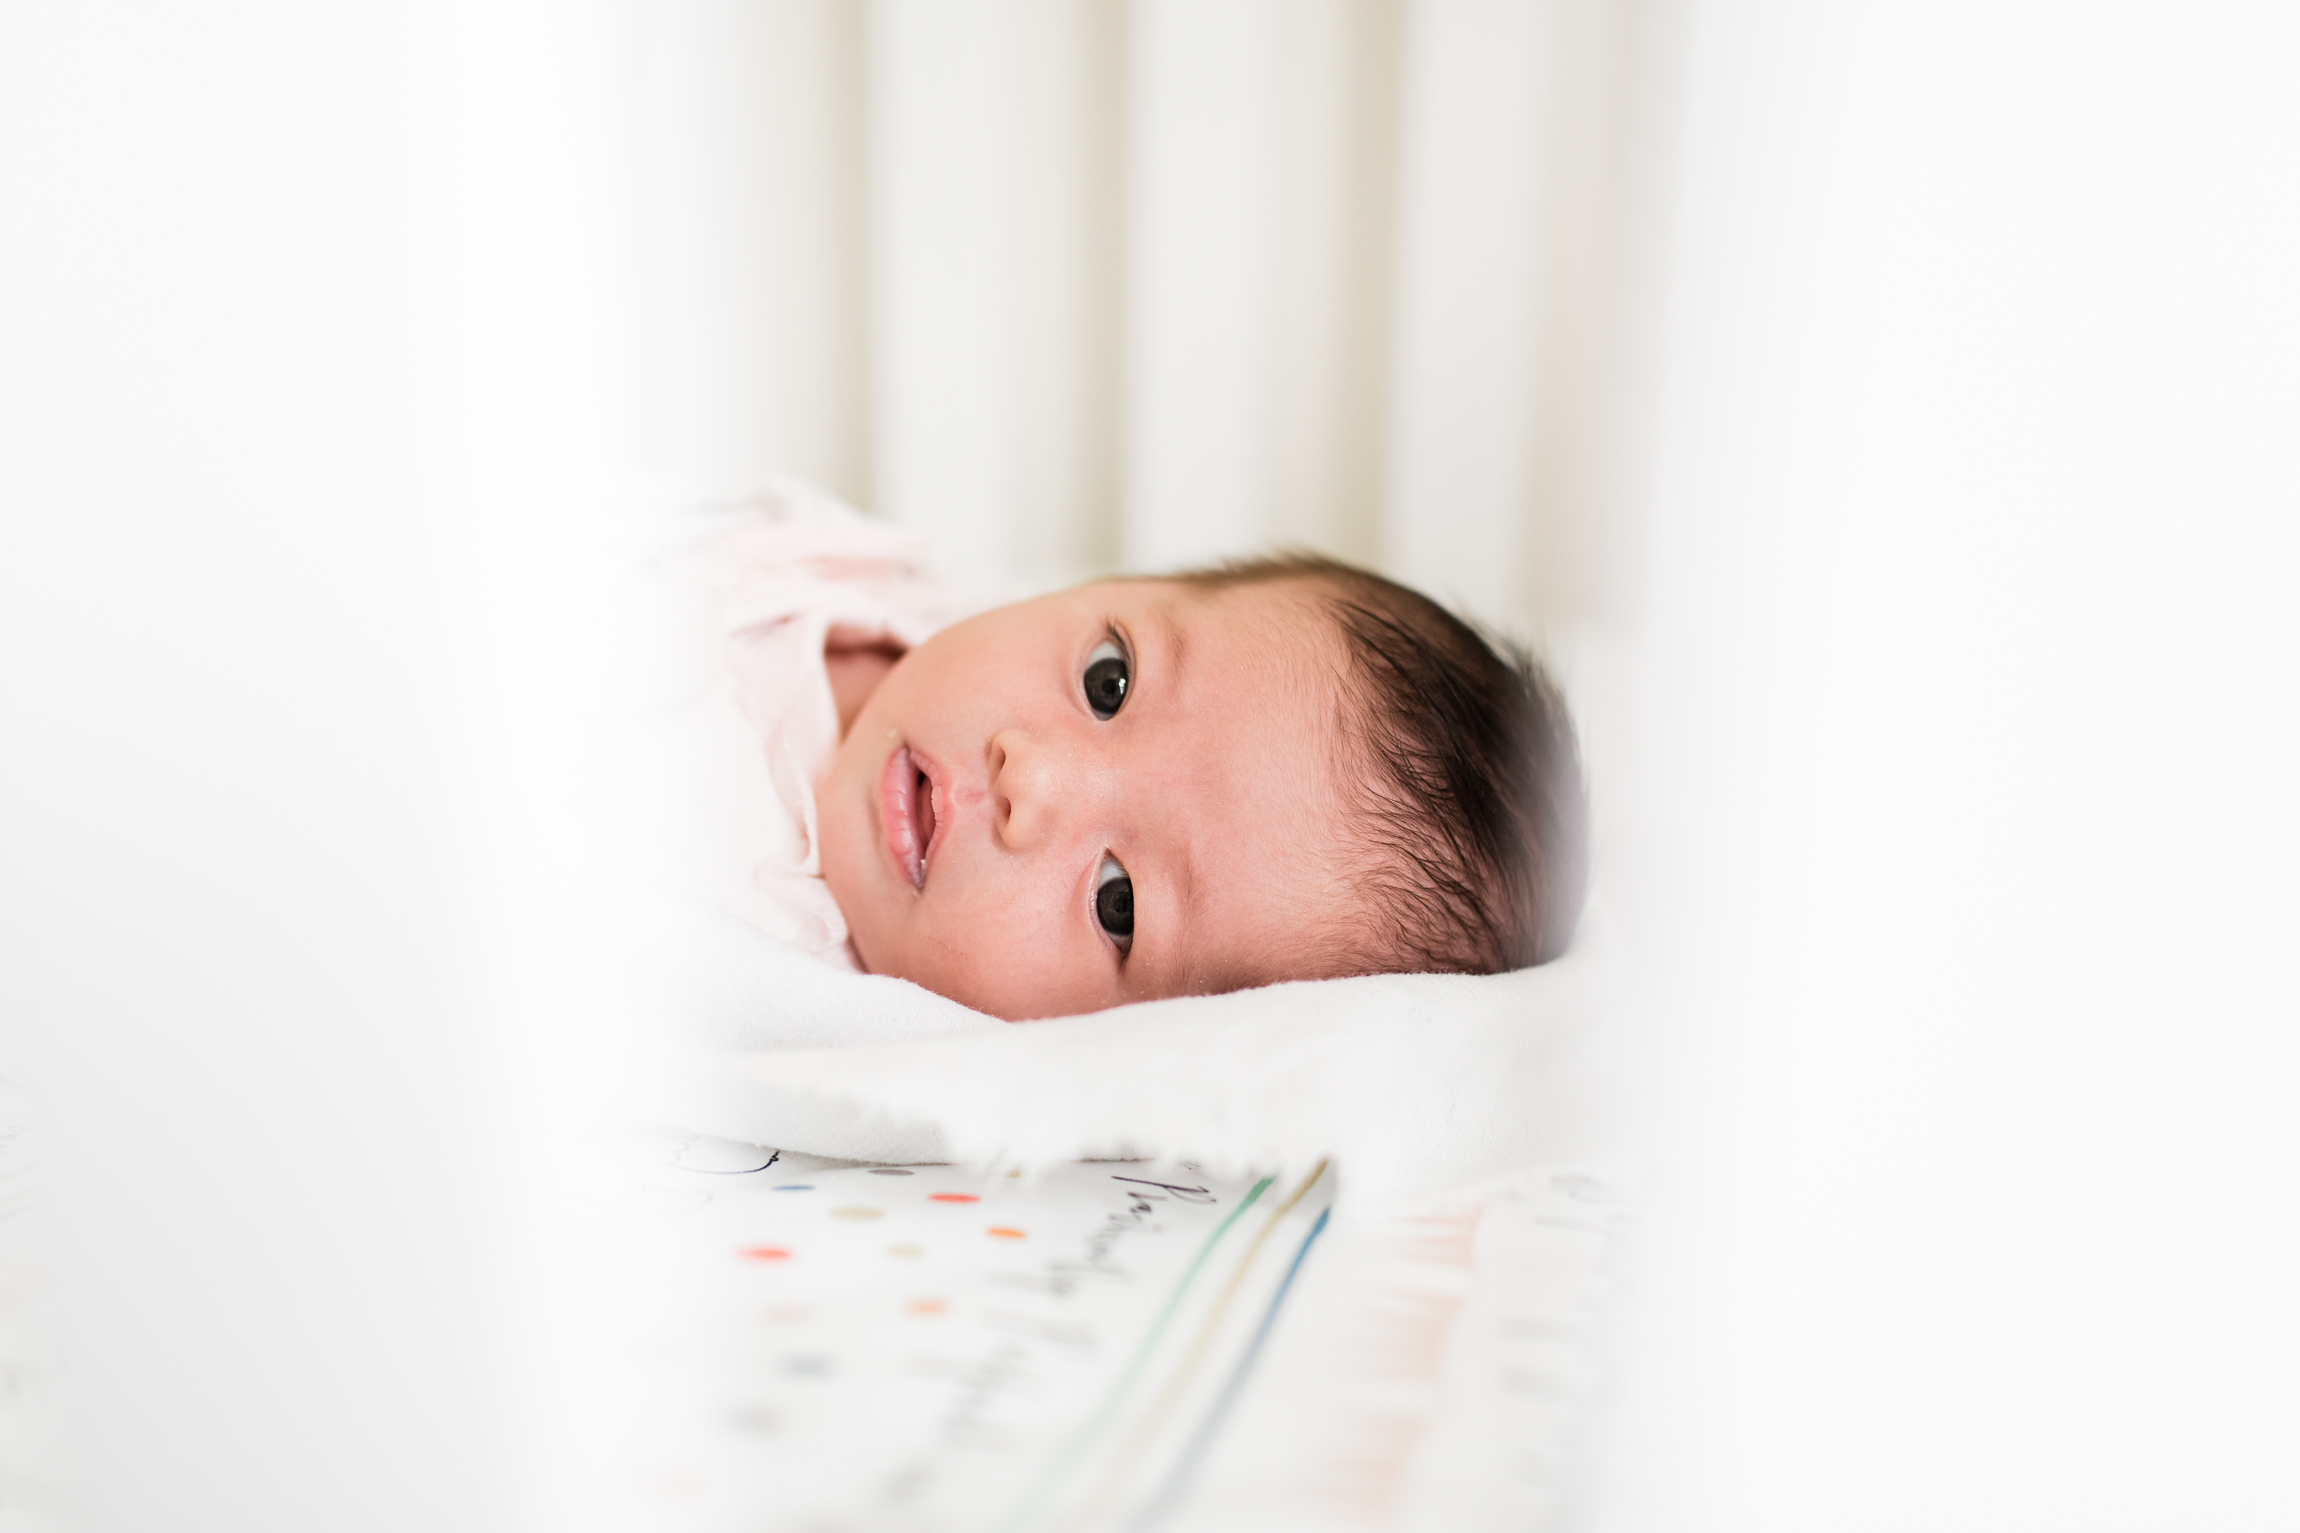  newborn baby in crib, close-up portrait, Kansas City lifestyle newborn photographer, in-home newborn session 